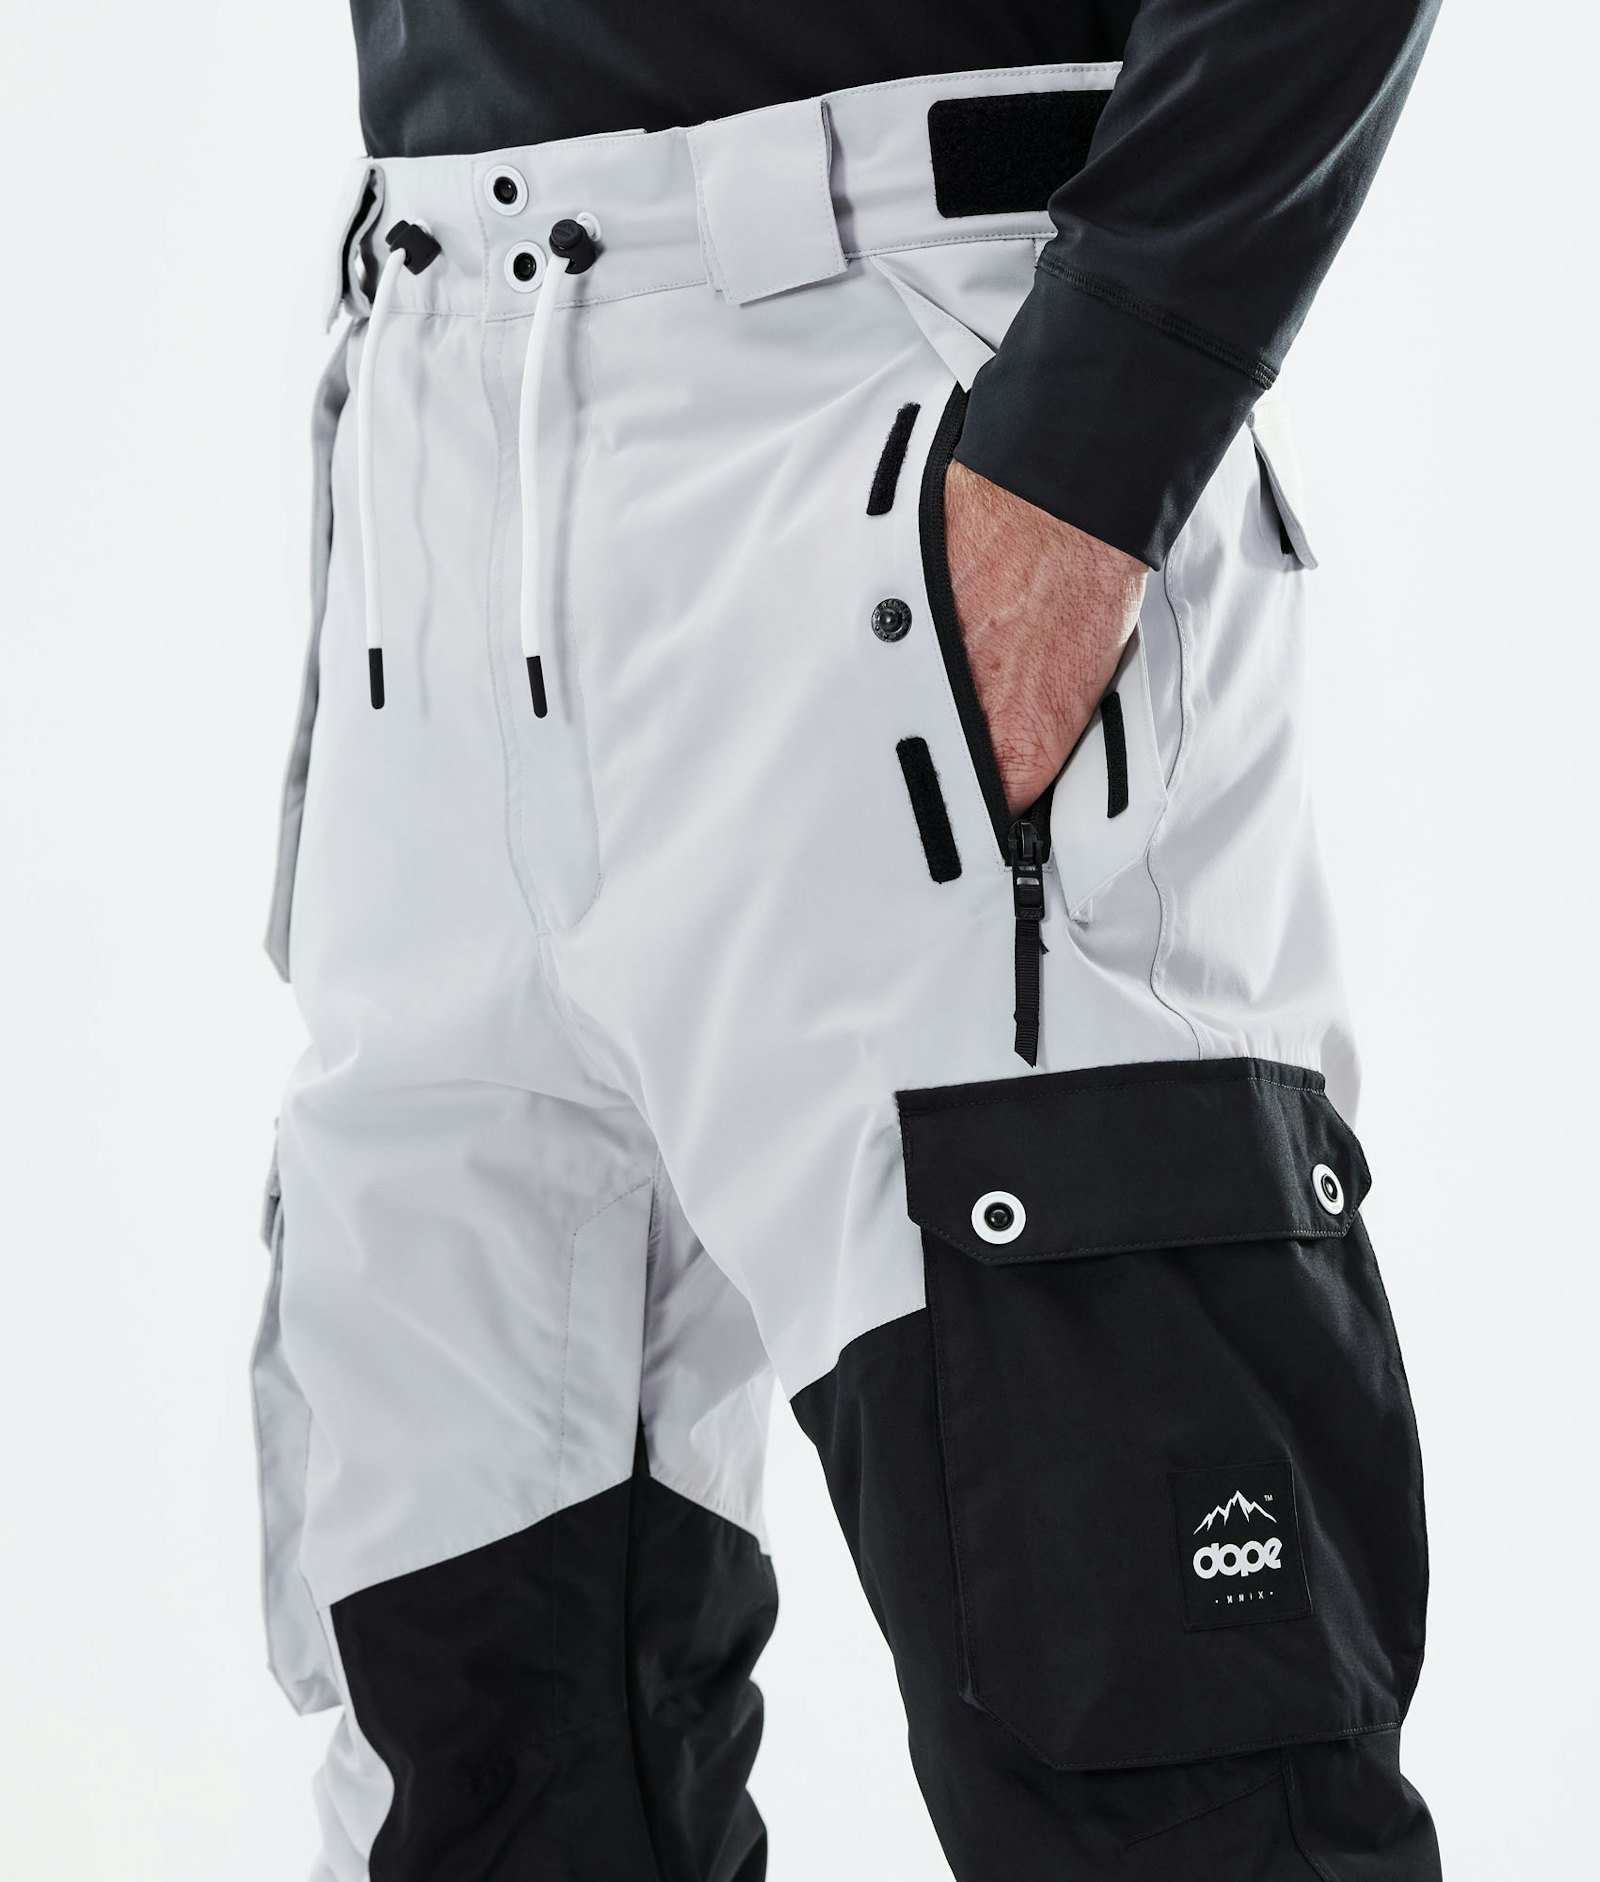 Adept 2020 Ski Pants Men Light Grey/Black